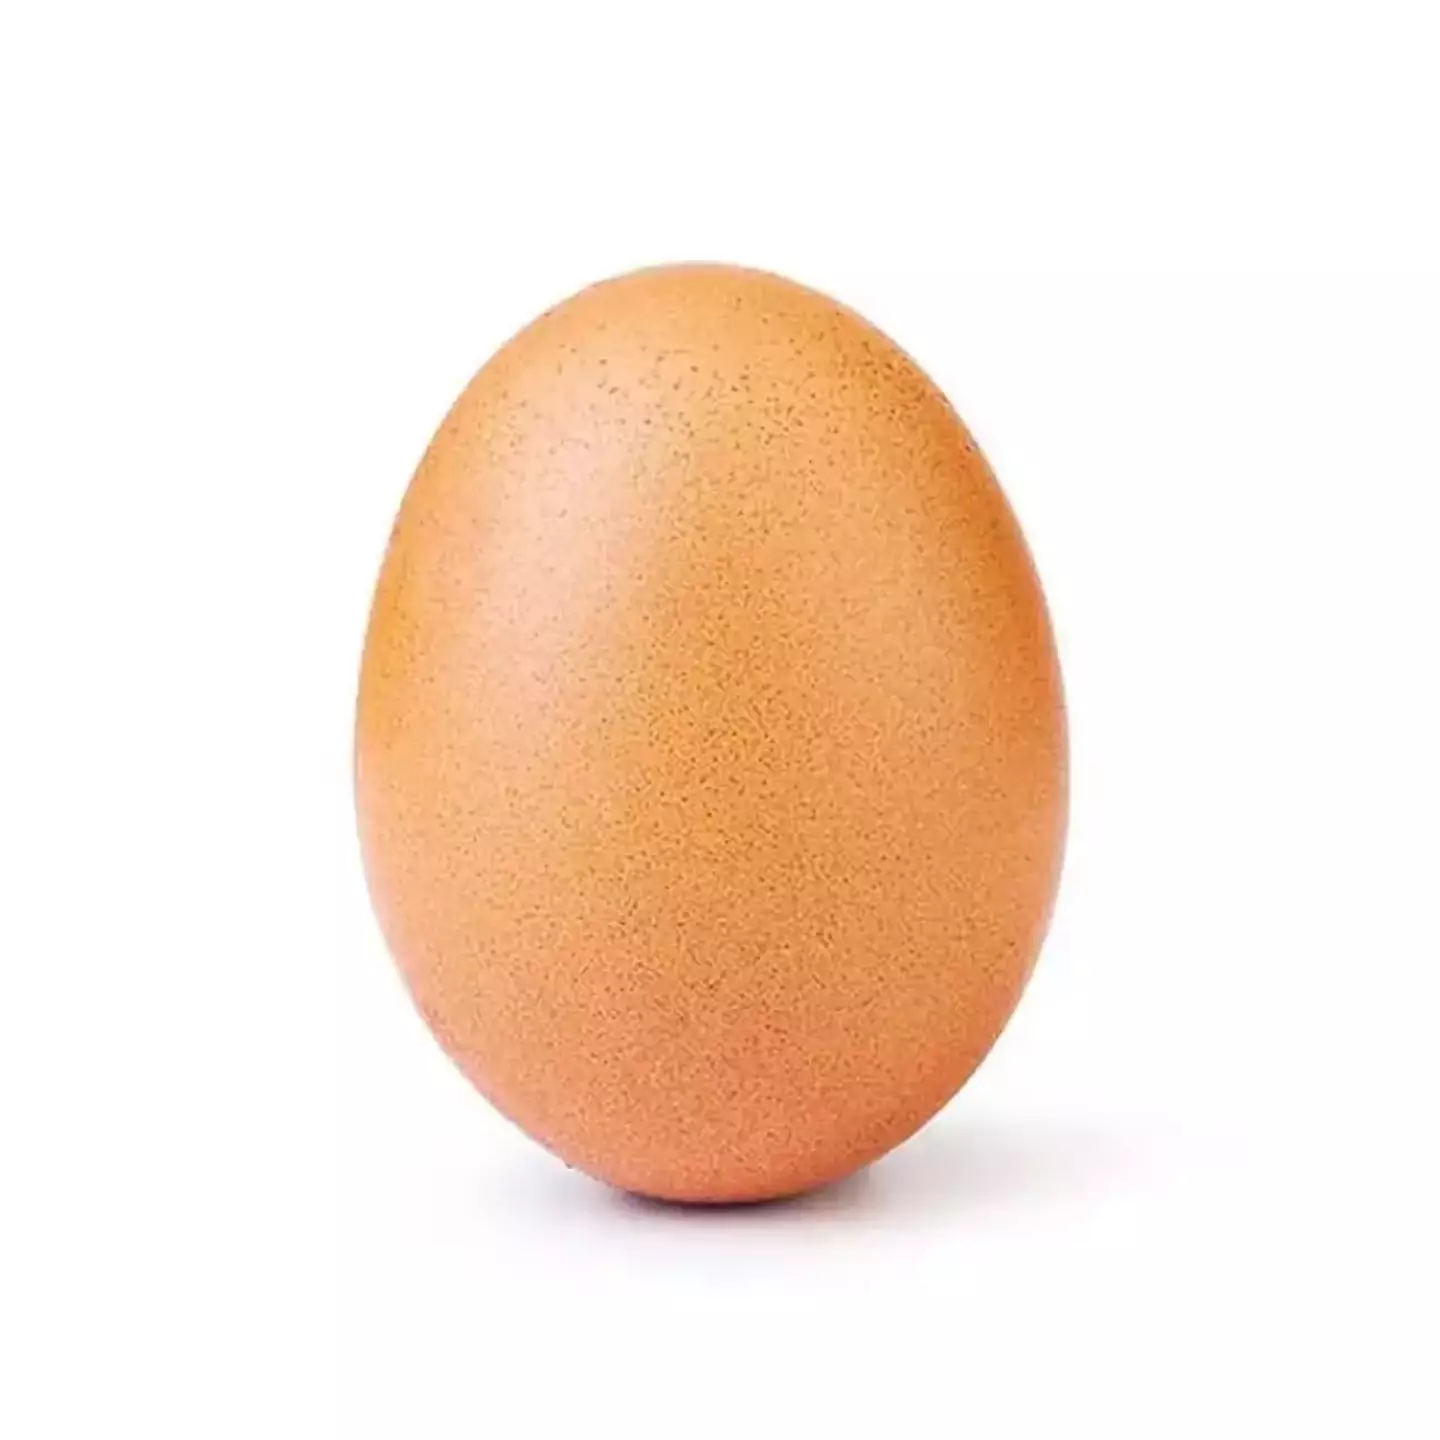 The 'egg' creator said the social media success was a 'fluke.